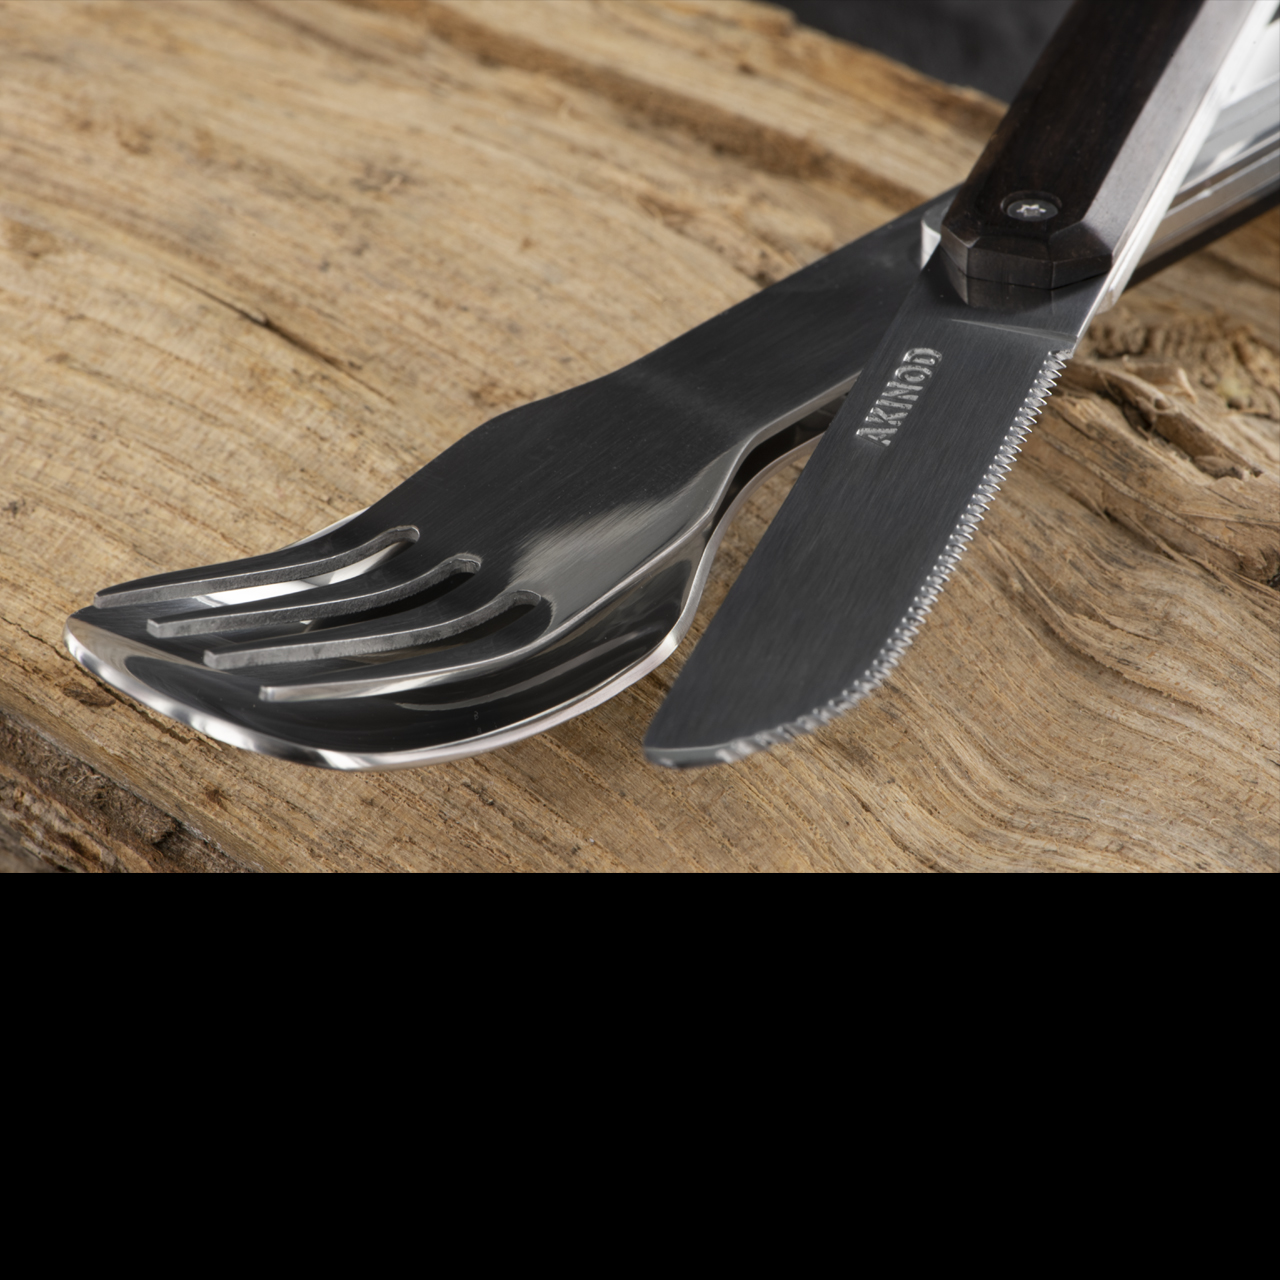 Akinod 12H34 Magnetic Cutlery Set - Olive Wood Handle